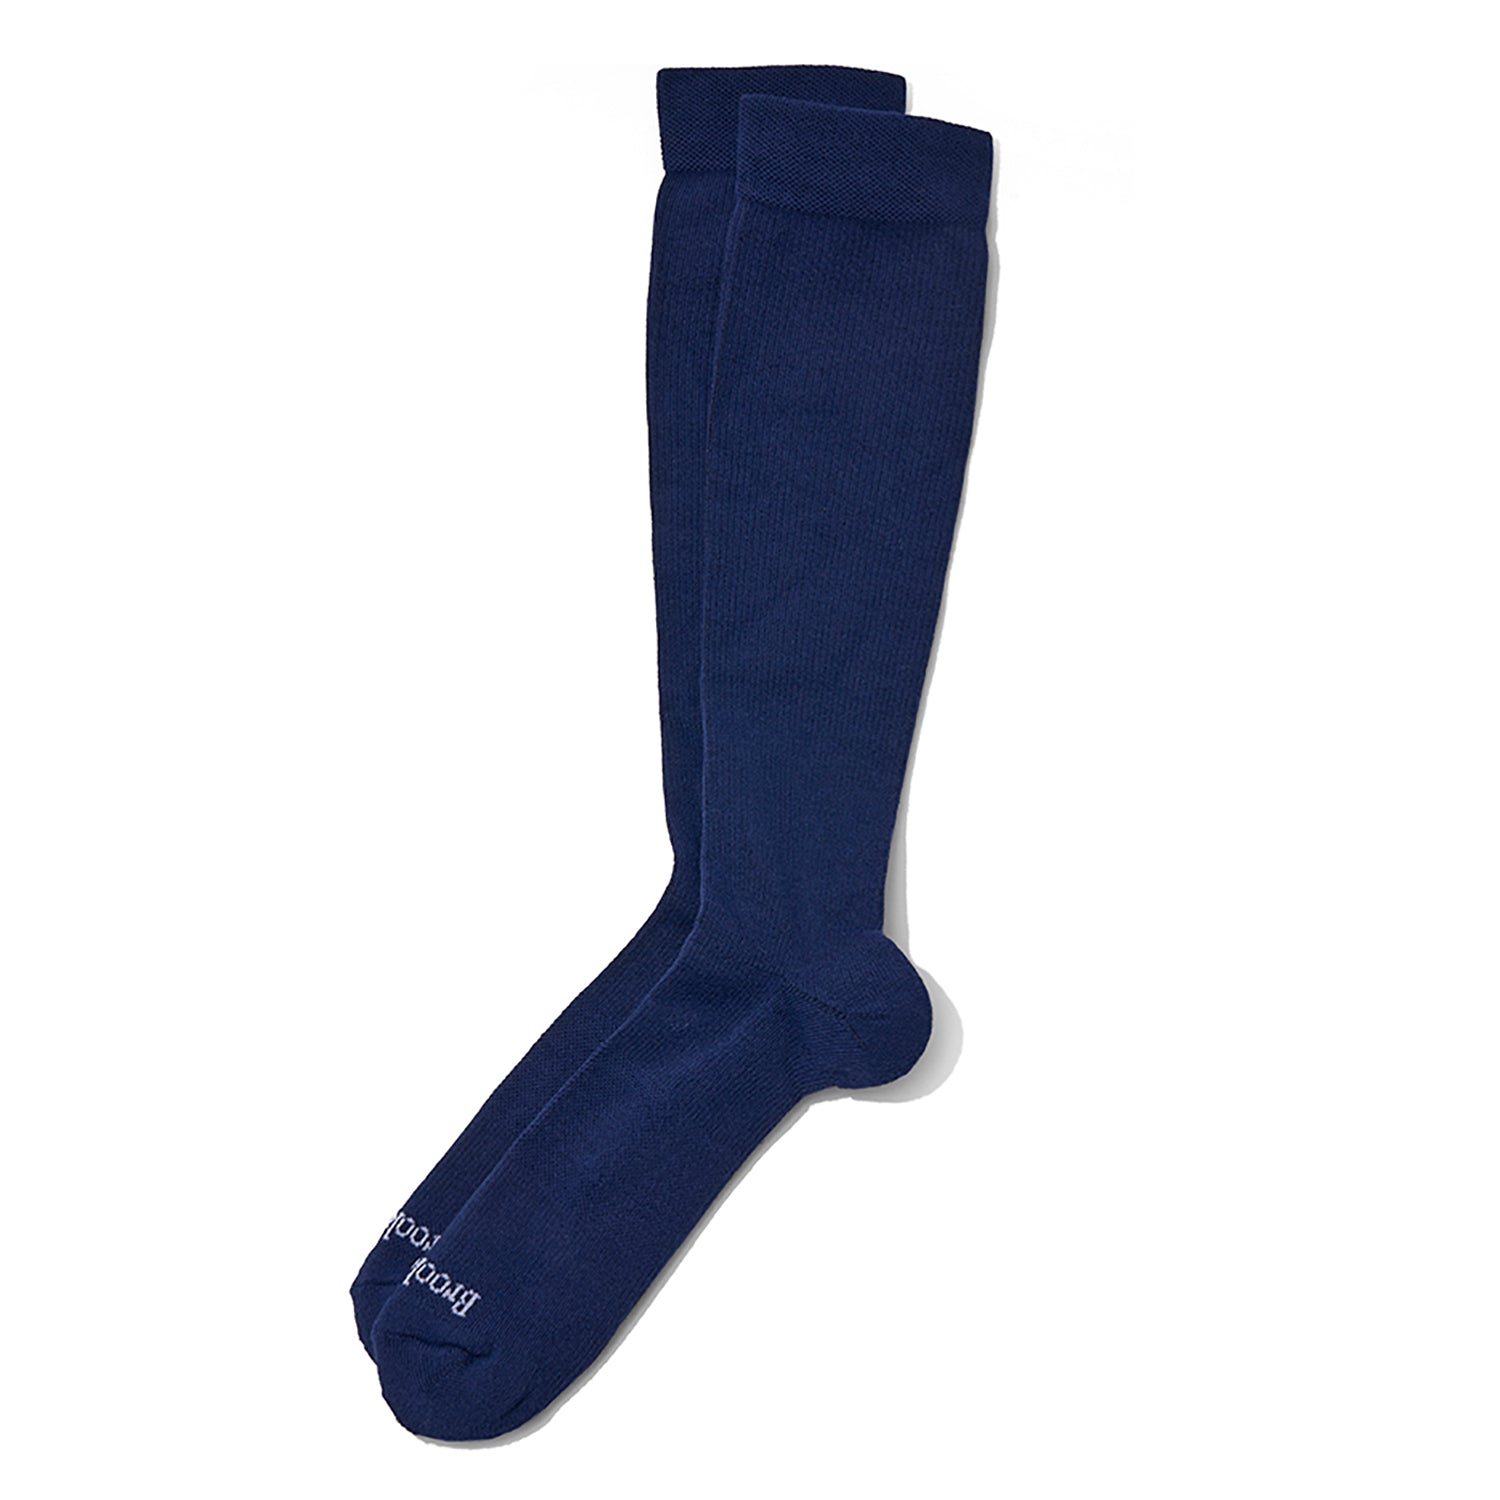 Brookstone Knee High Compression Sock Set - 2 Pack